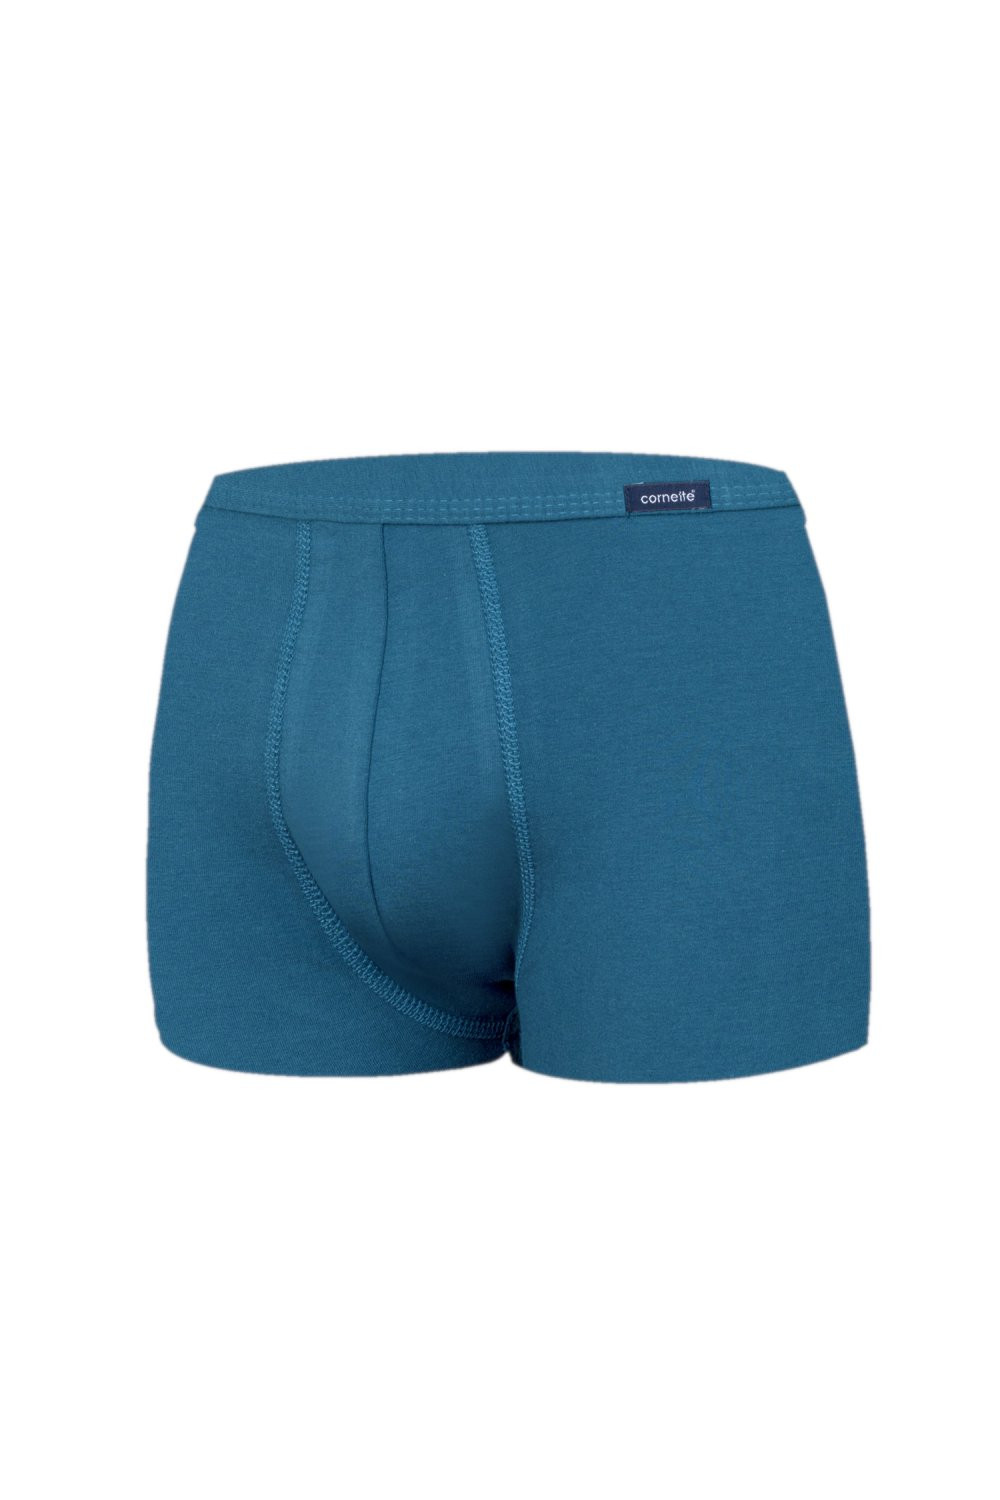 Pánské boxerky 223 Authentic mini blue - CORNETTE Barva: Modrá, Velikost: M